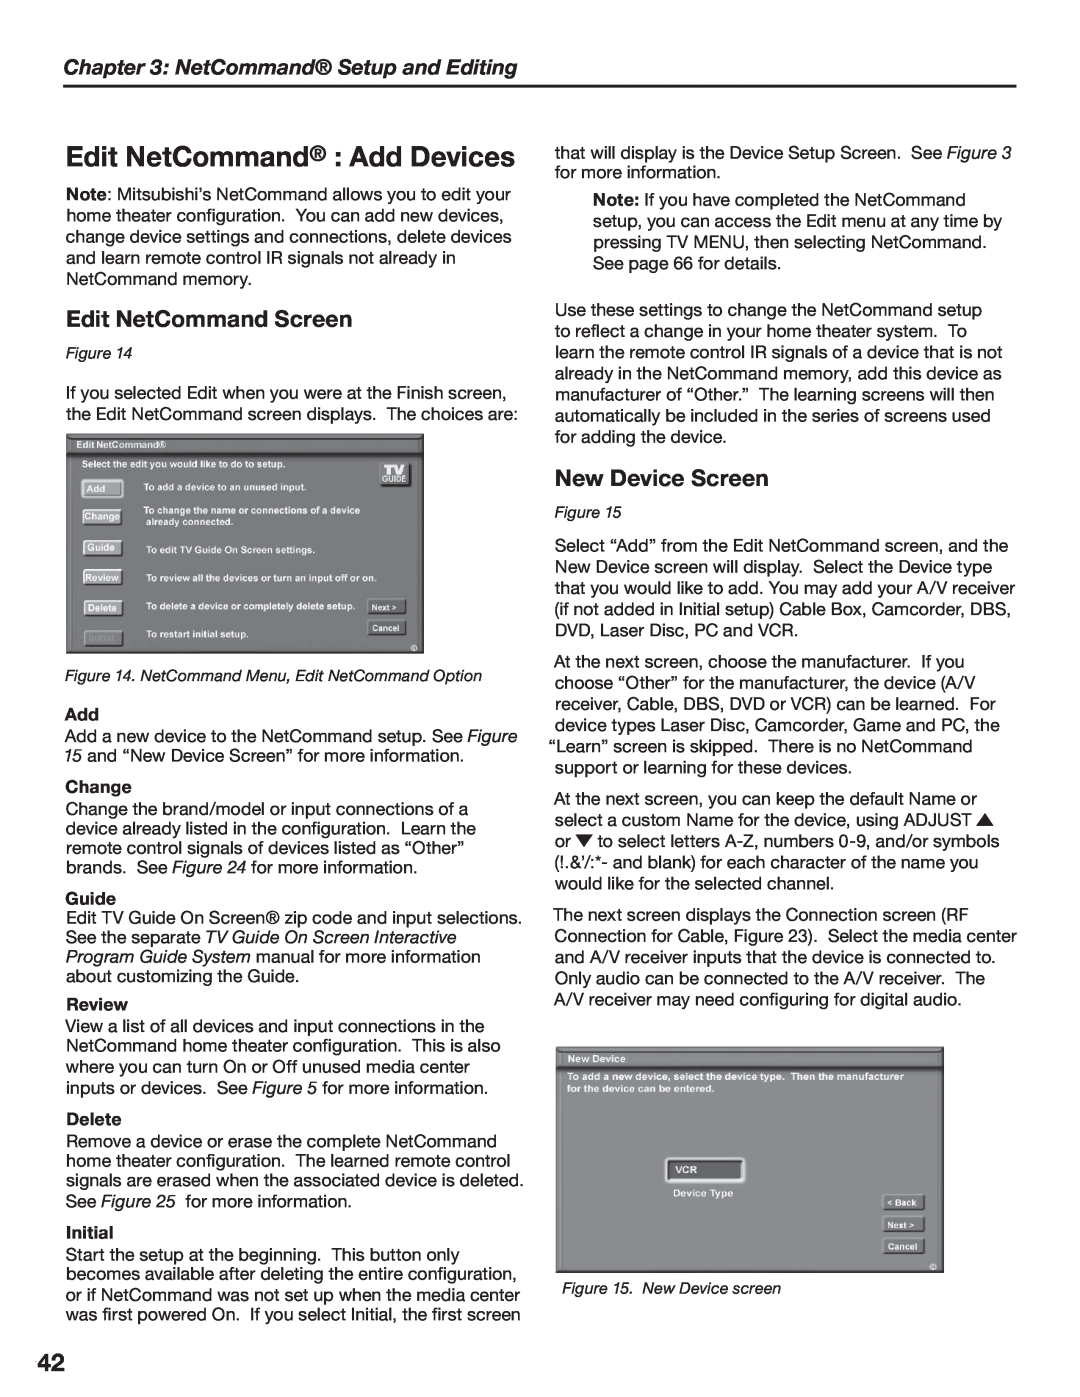 Mitsubishi Electronics LT-3280 manual Edit NetCommand Add Devices, Edit NetCommand Screen, New Device Screen, Change, Guide 